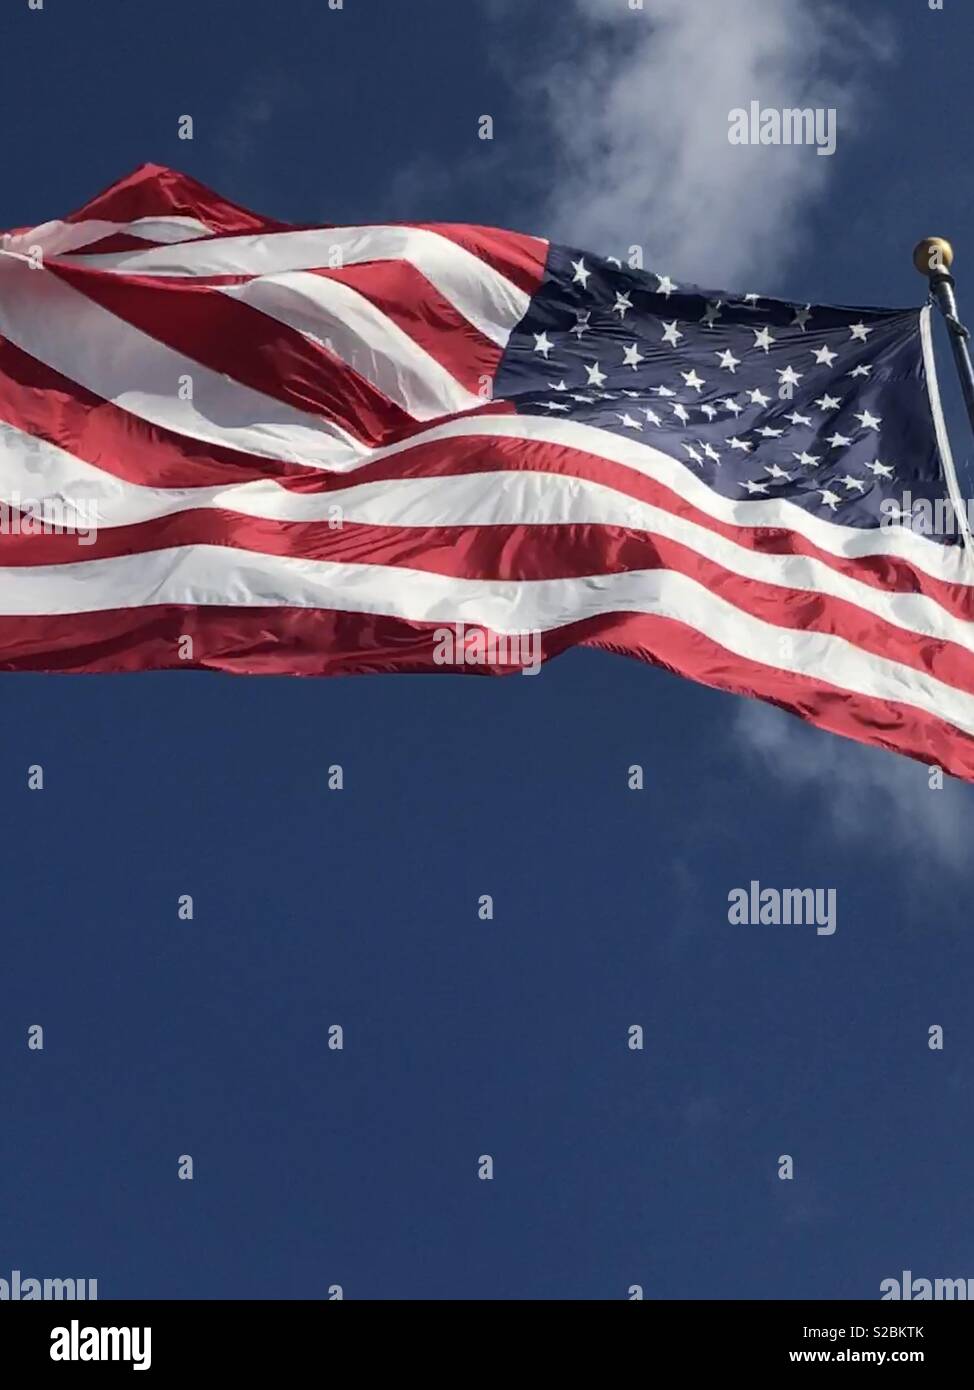 Star spangled banner- Flag of the USA Stock Photo